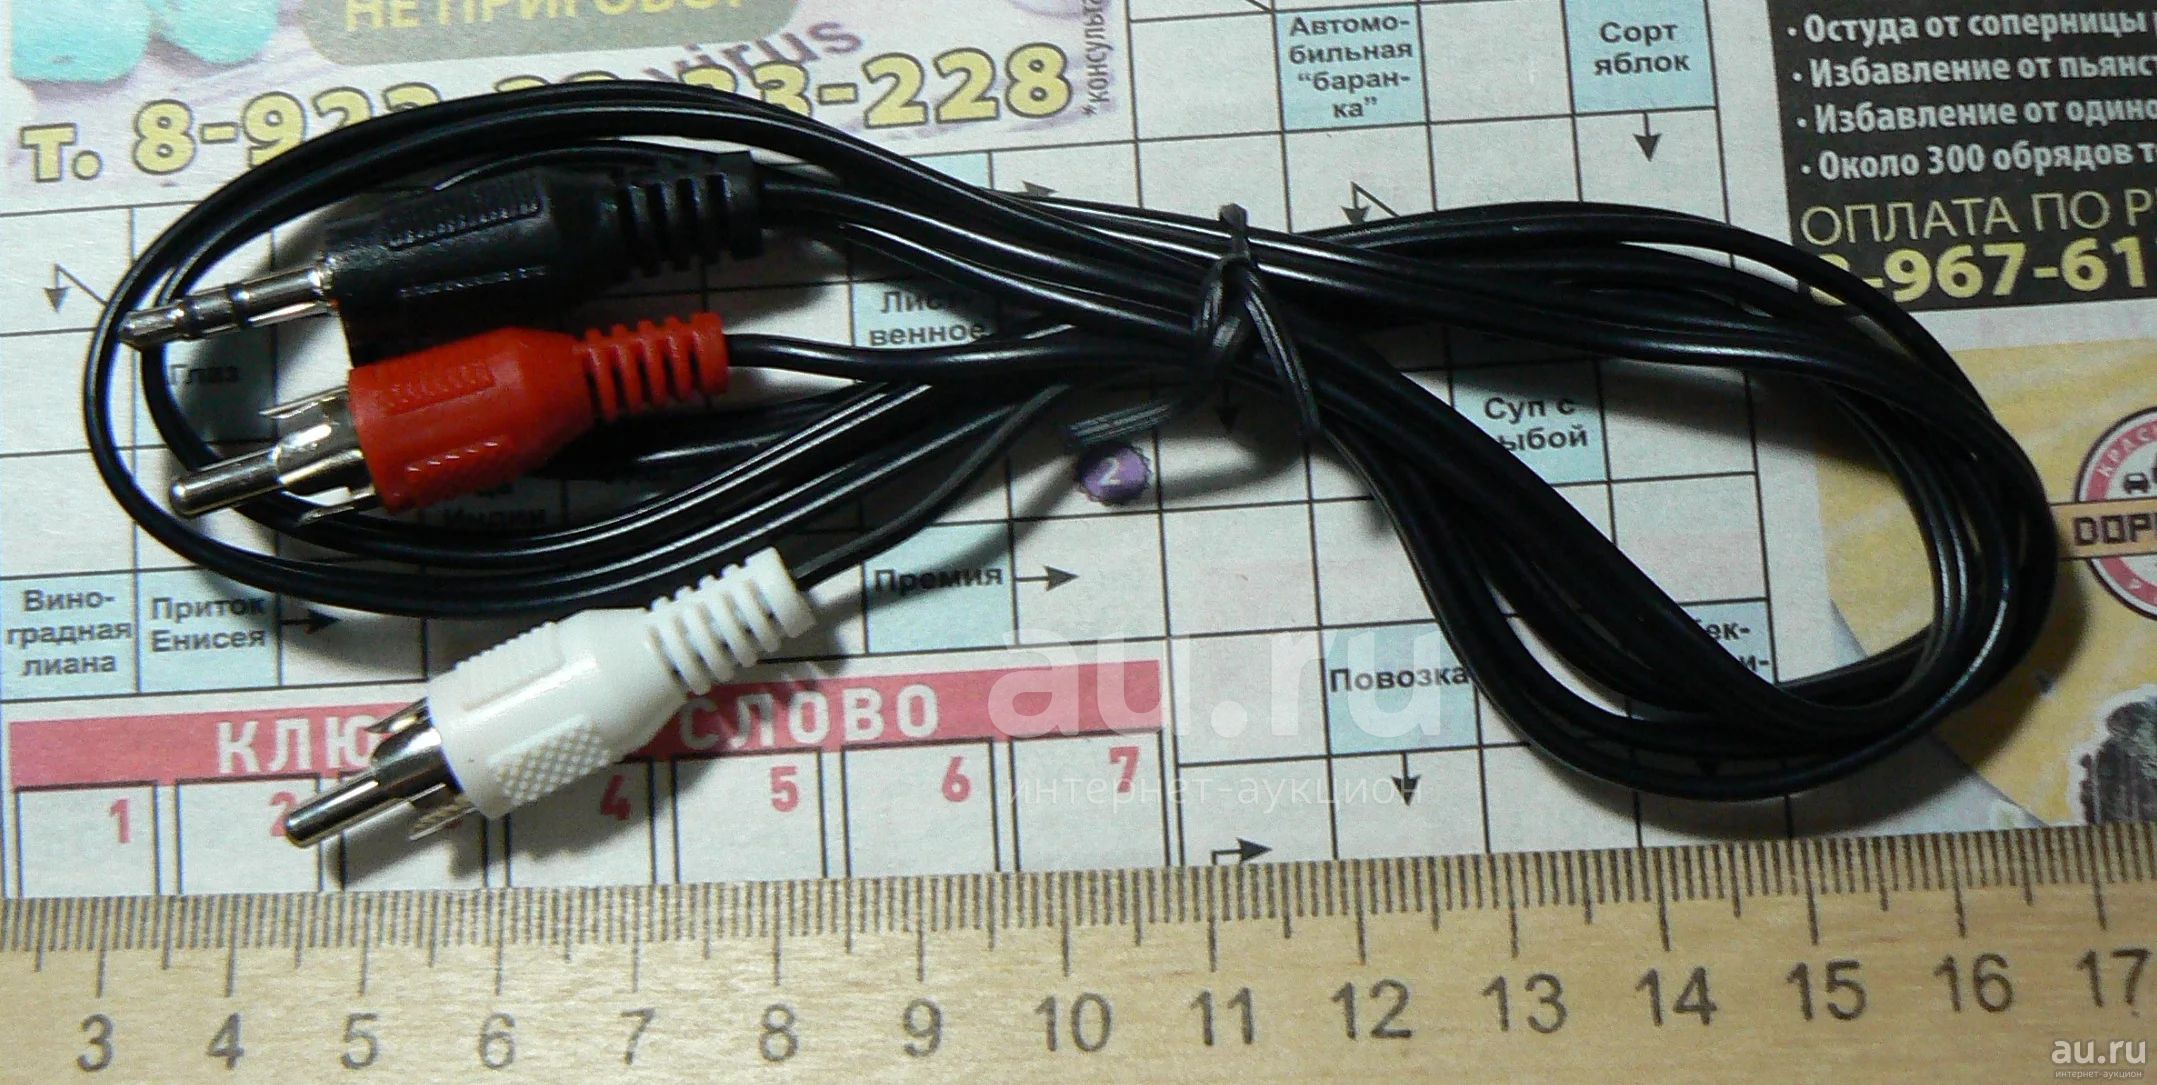  шнур (аудиошнур), шнур - кабель - переходник со штекерами RCA .